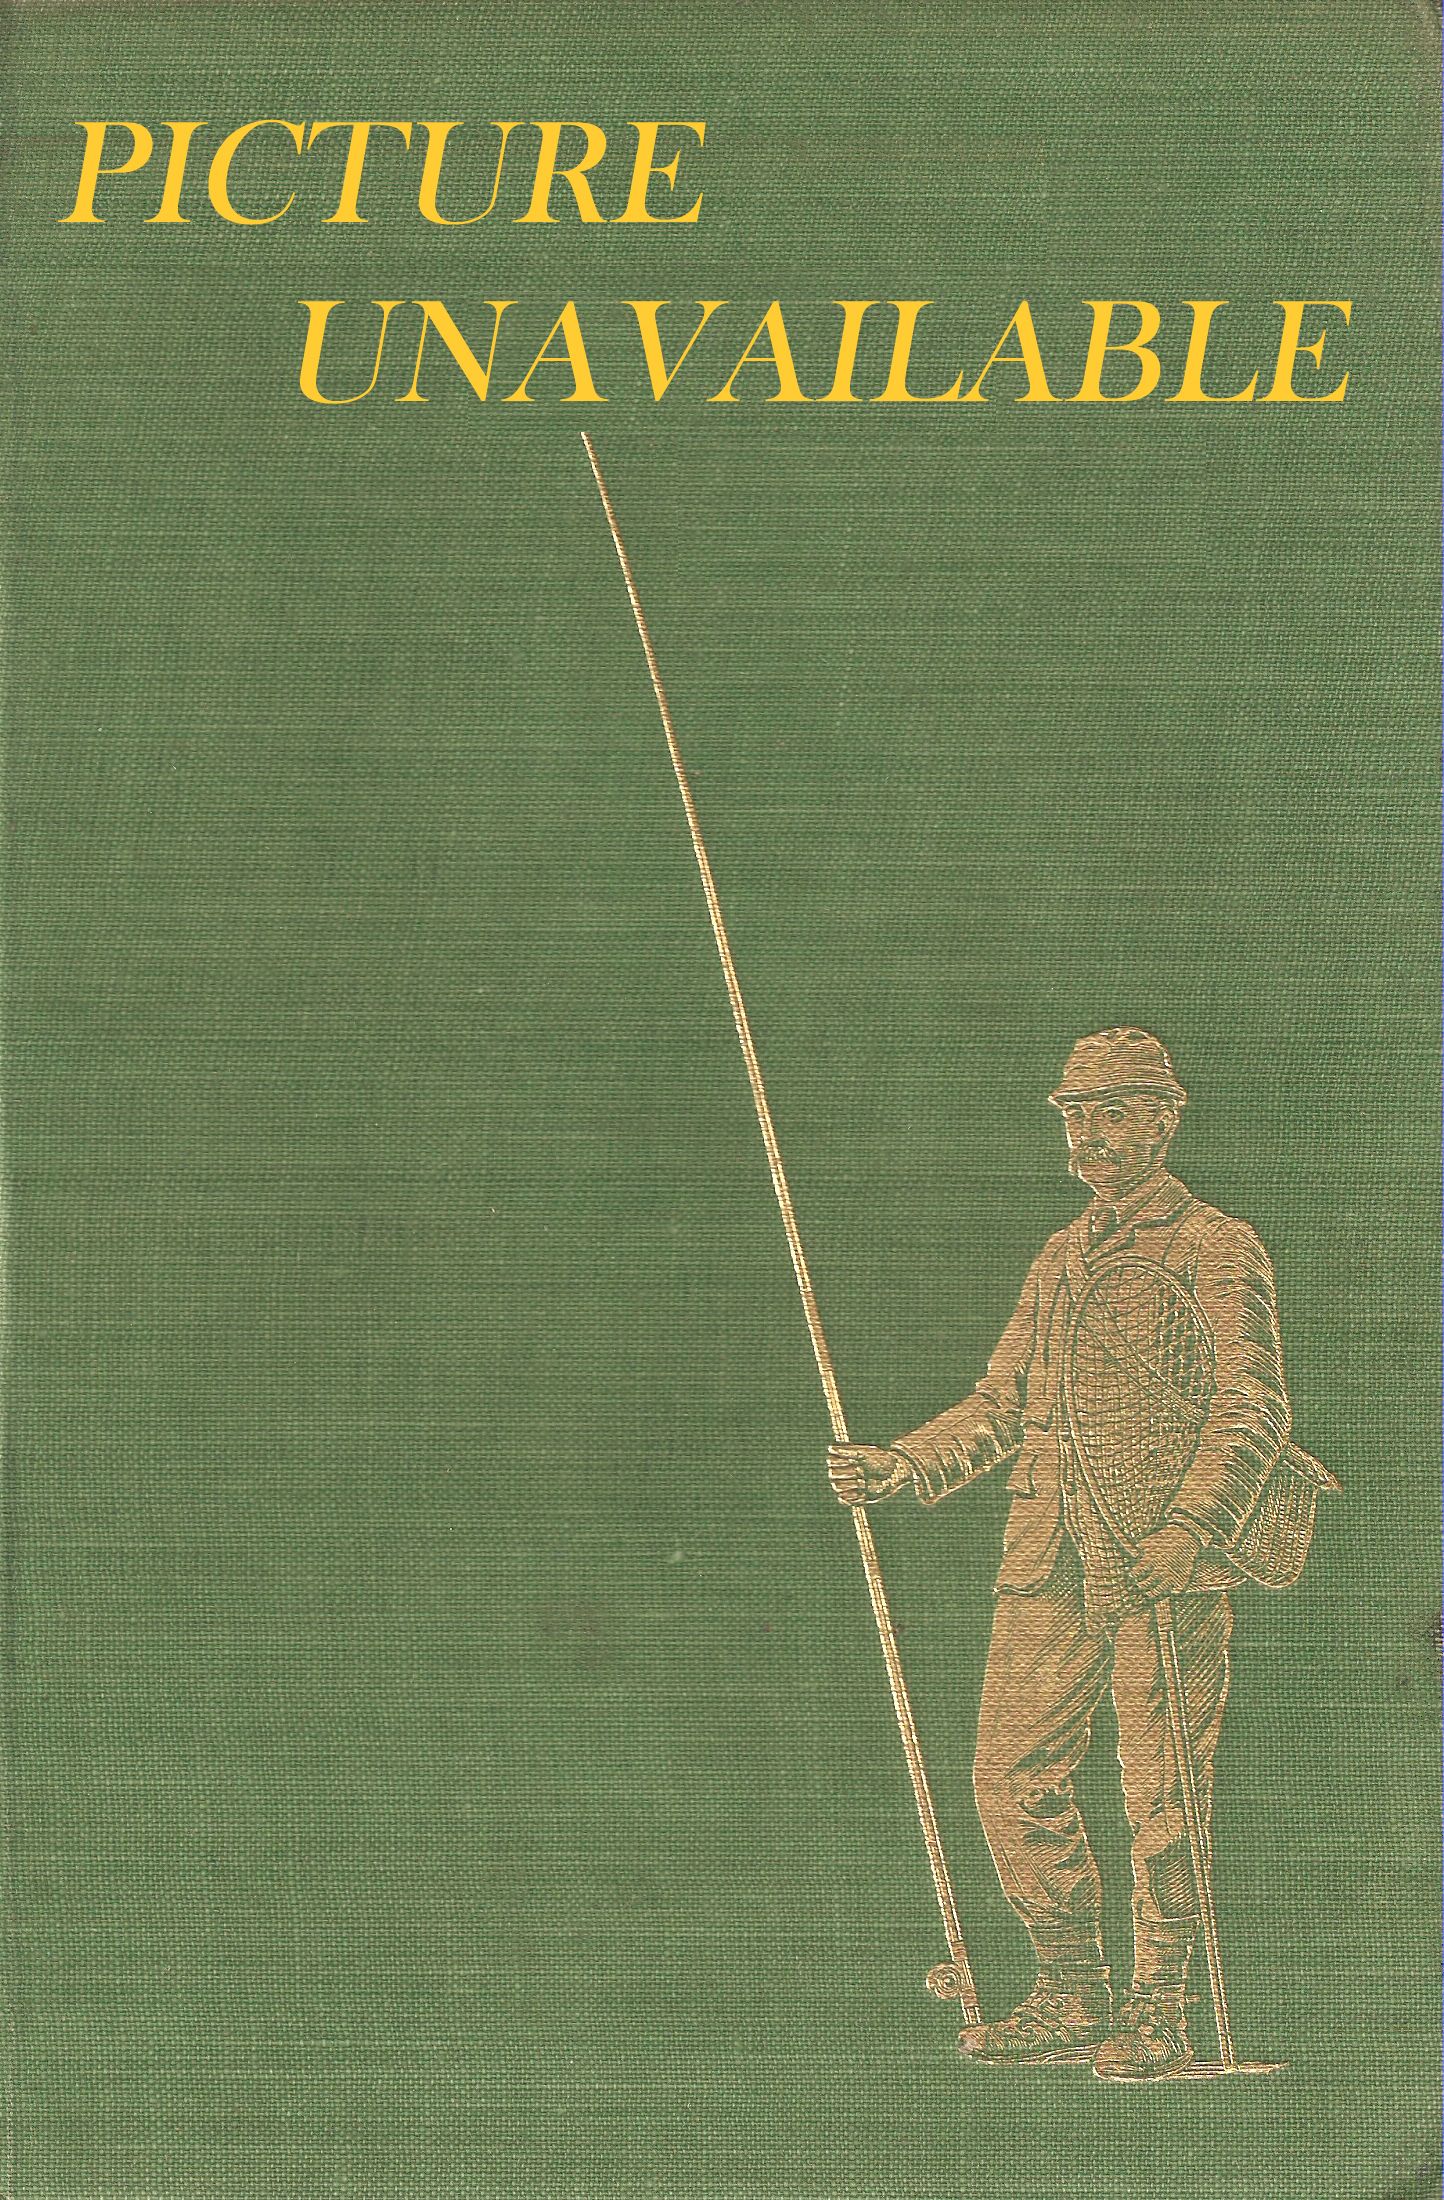 LOCH LOMONDSIDE: GATEWAY TO THE WESTERN HIGHLANDS OF SCOTLAND. By John  Mitchell. New Naturalist No. 88. Paperback Edition.